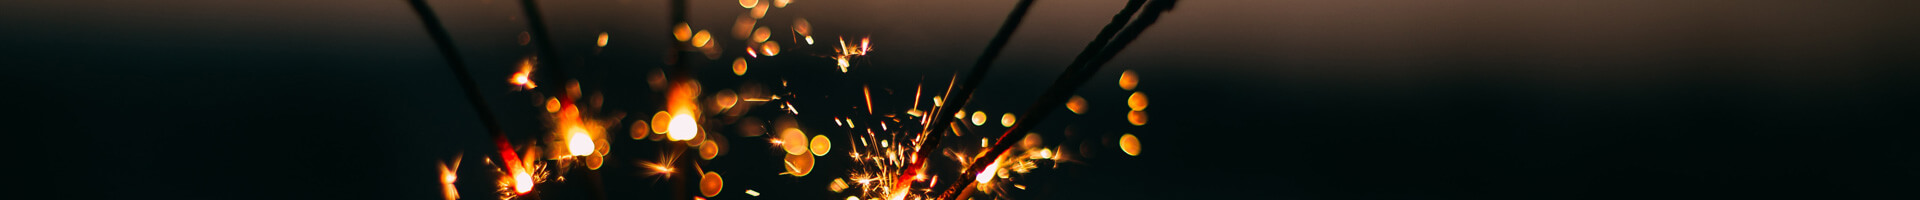 Firework sparks conjure up a festive atmosphere.